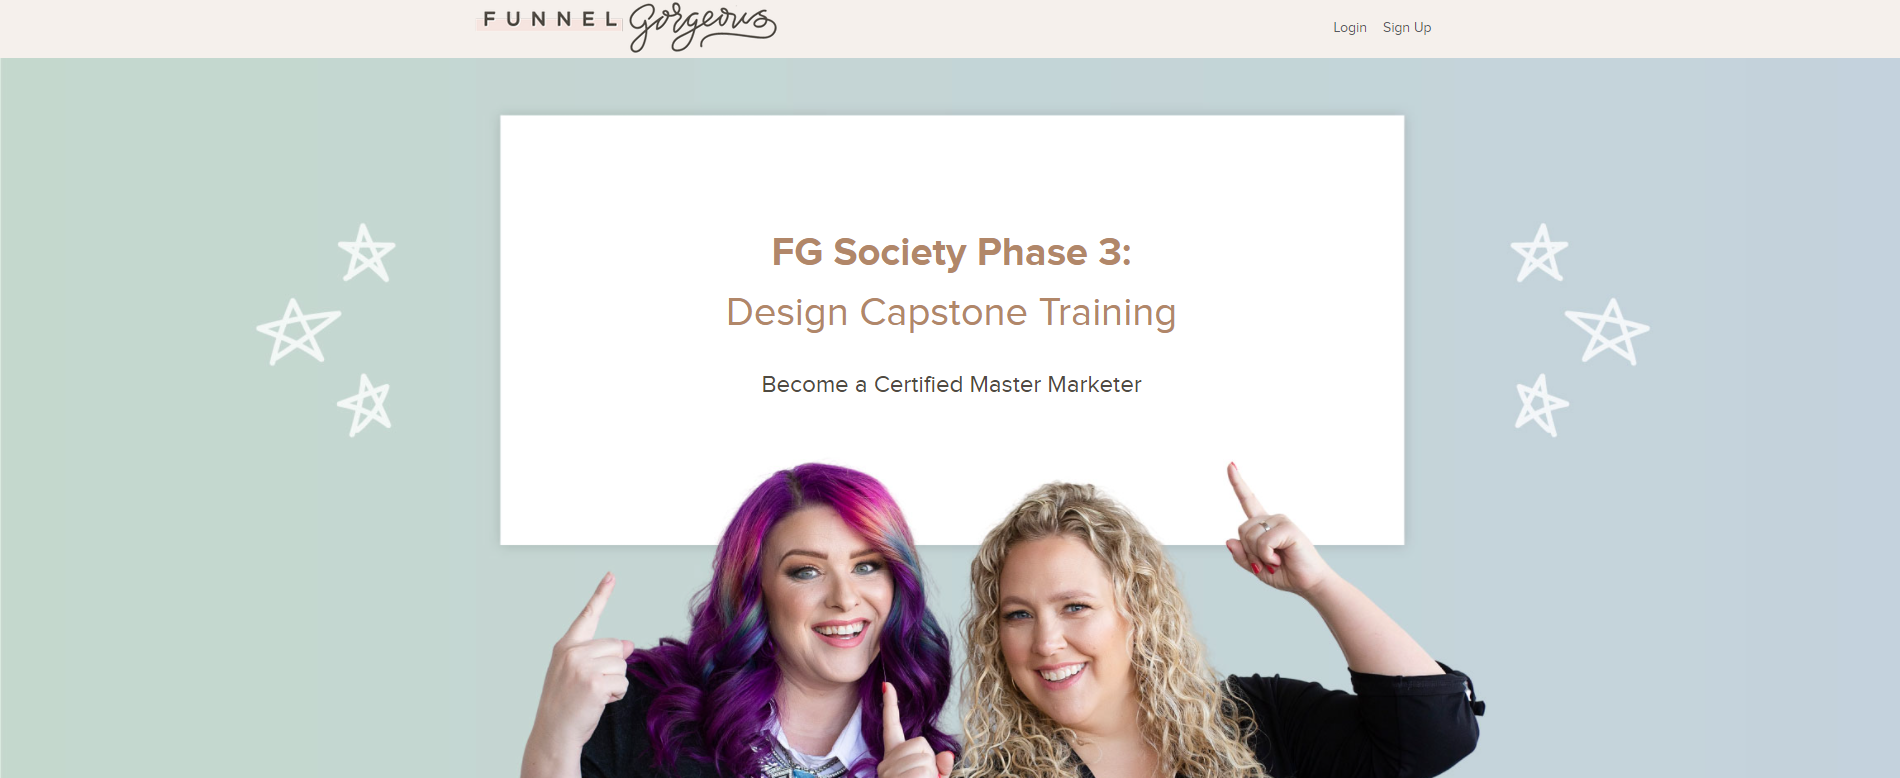 FG Society Certification Phase 3 - Design Capstone Training